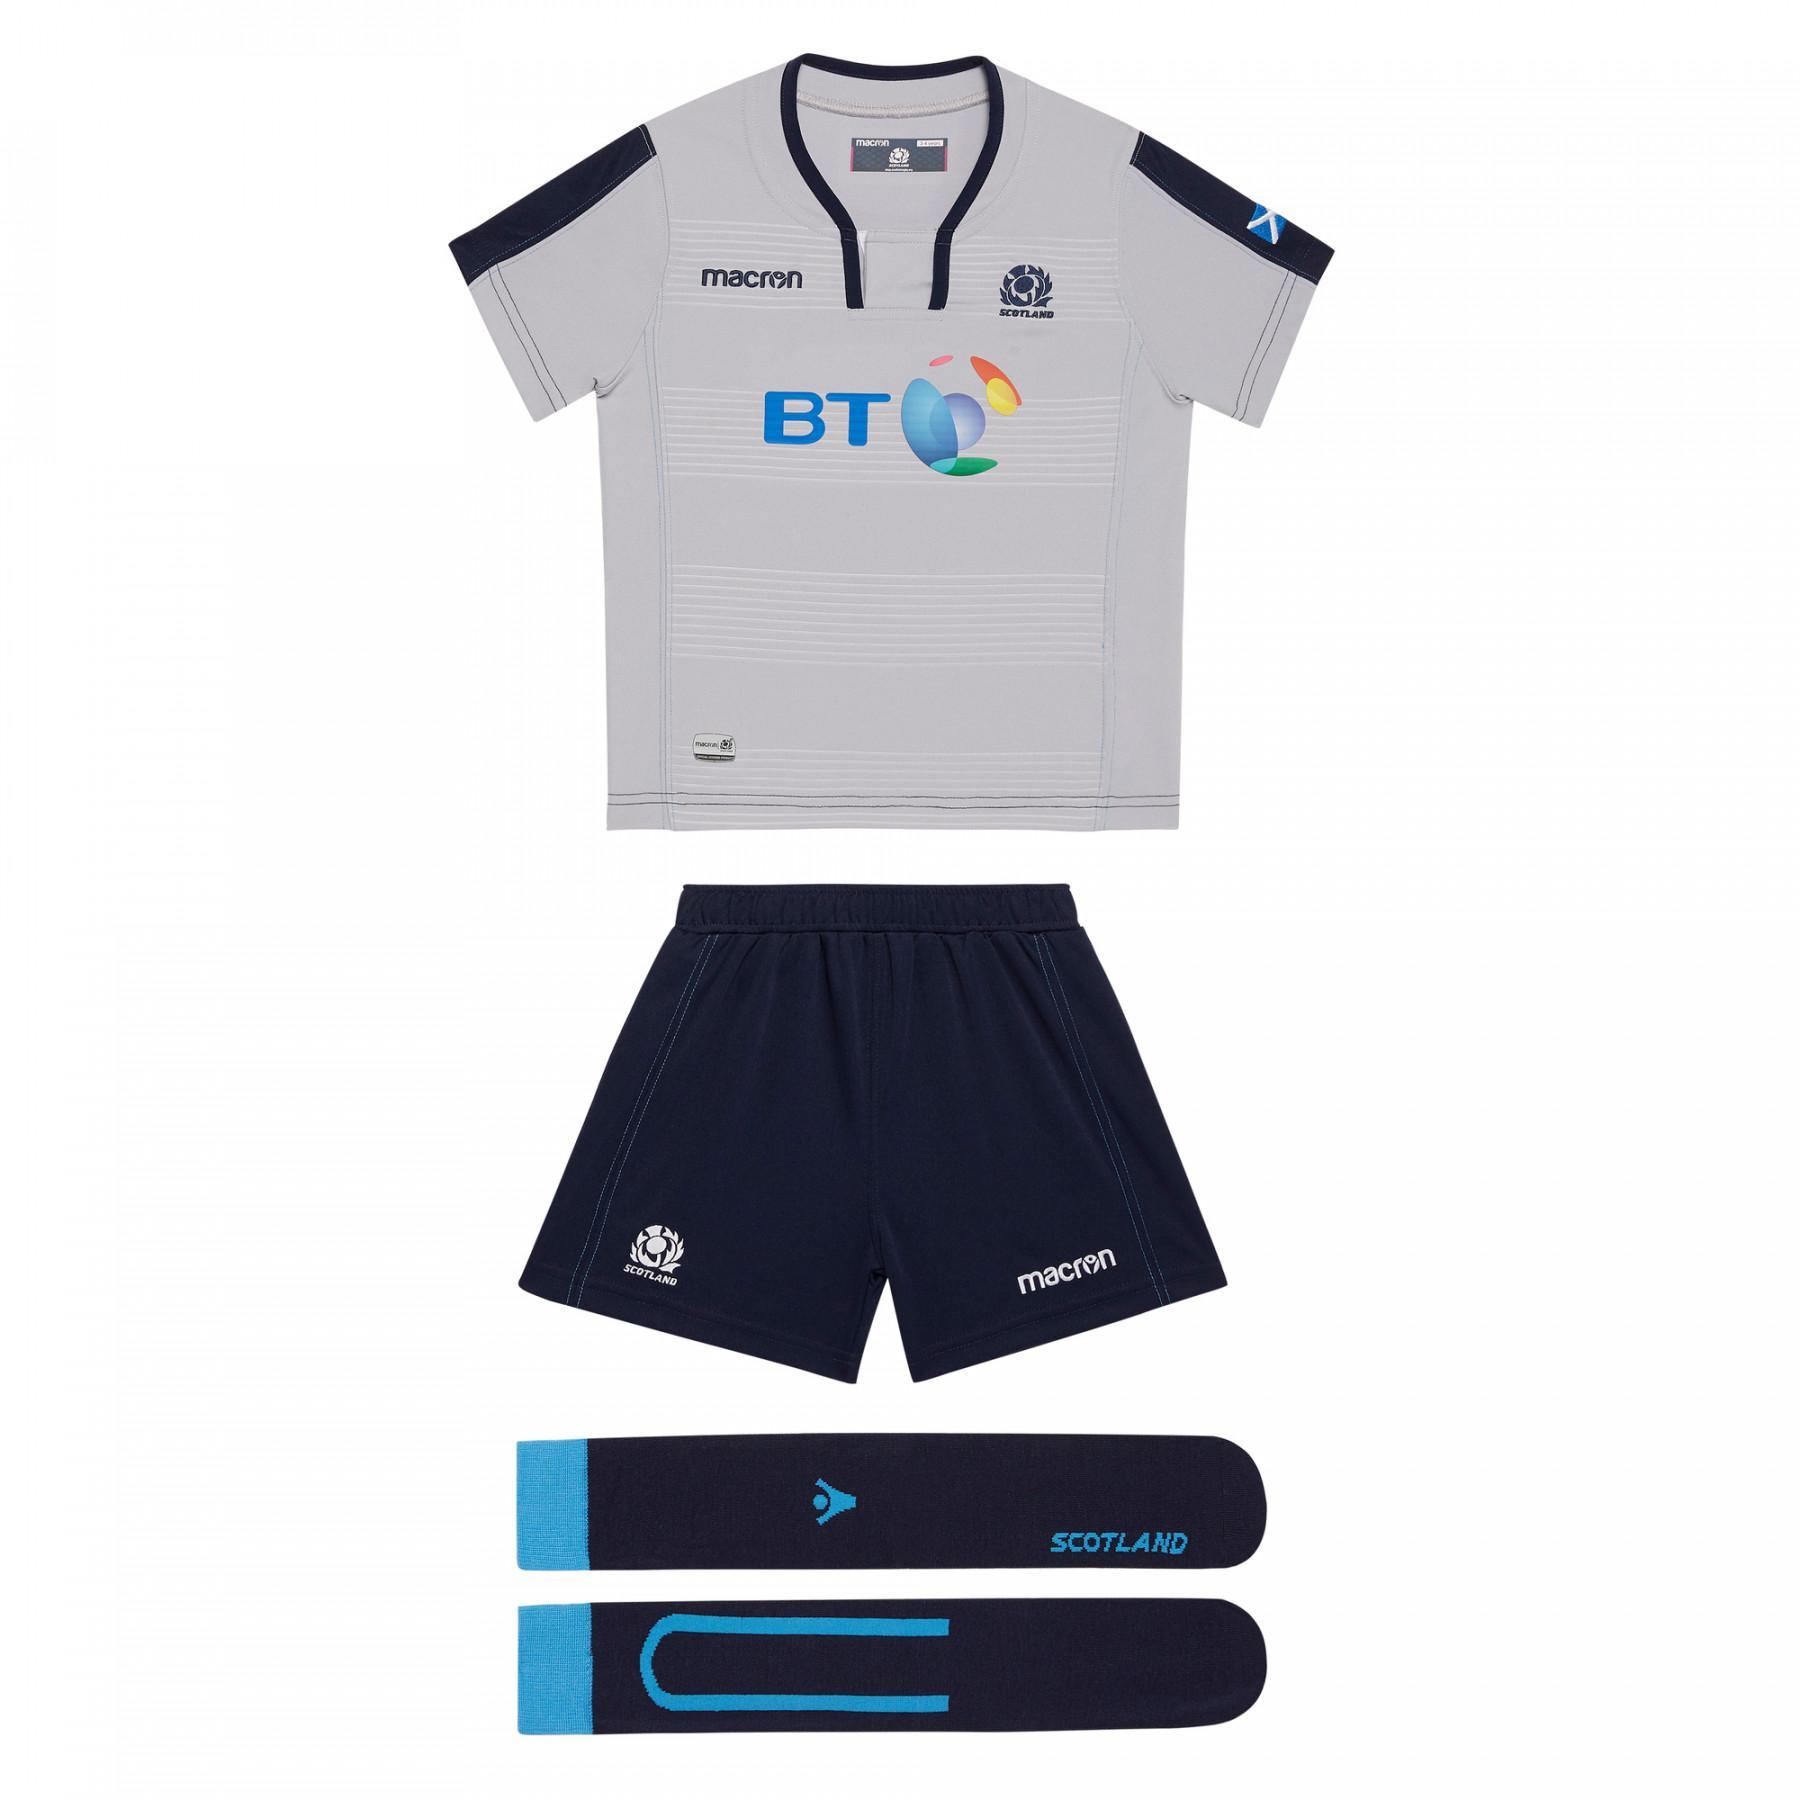 Mini kit all'aperto Scotland Rugby 18/19